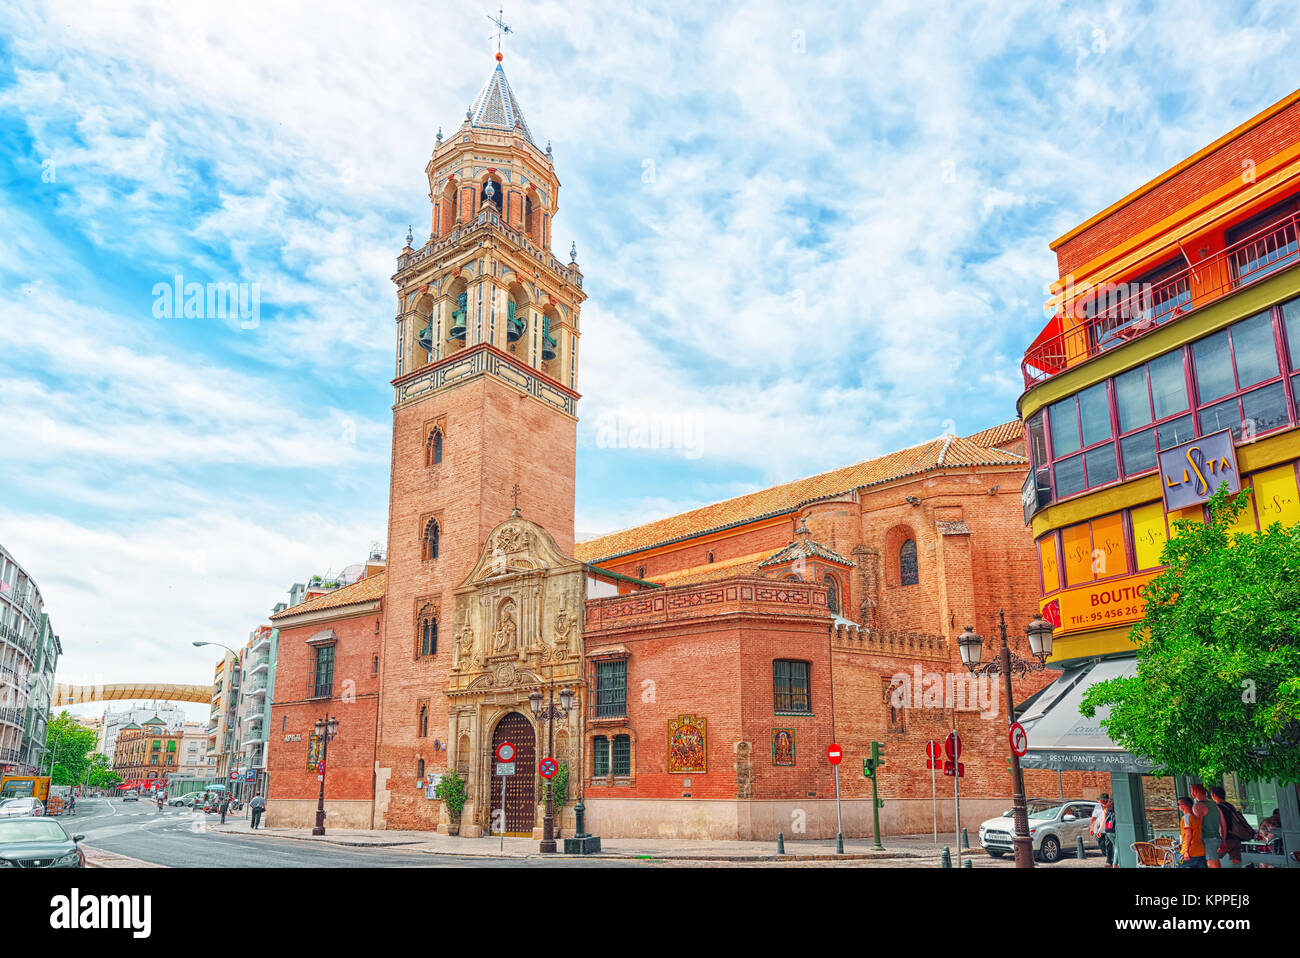 Seville, Spain - June 08, 2017 : St. Peter's Church (Iglesia de San Pedro ) near Metropol Parasol, in the old quarter of Seville, Spain. Stock Photo